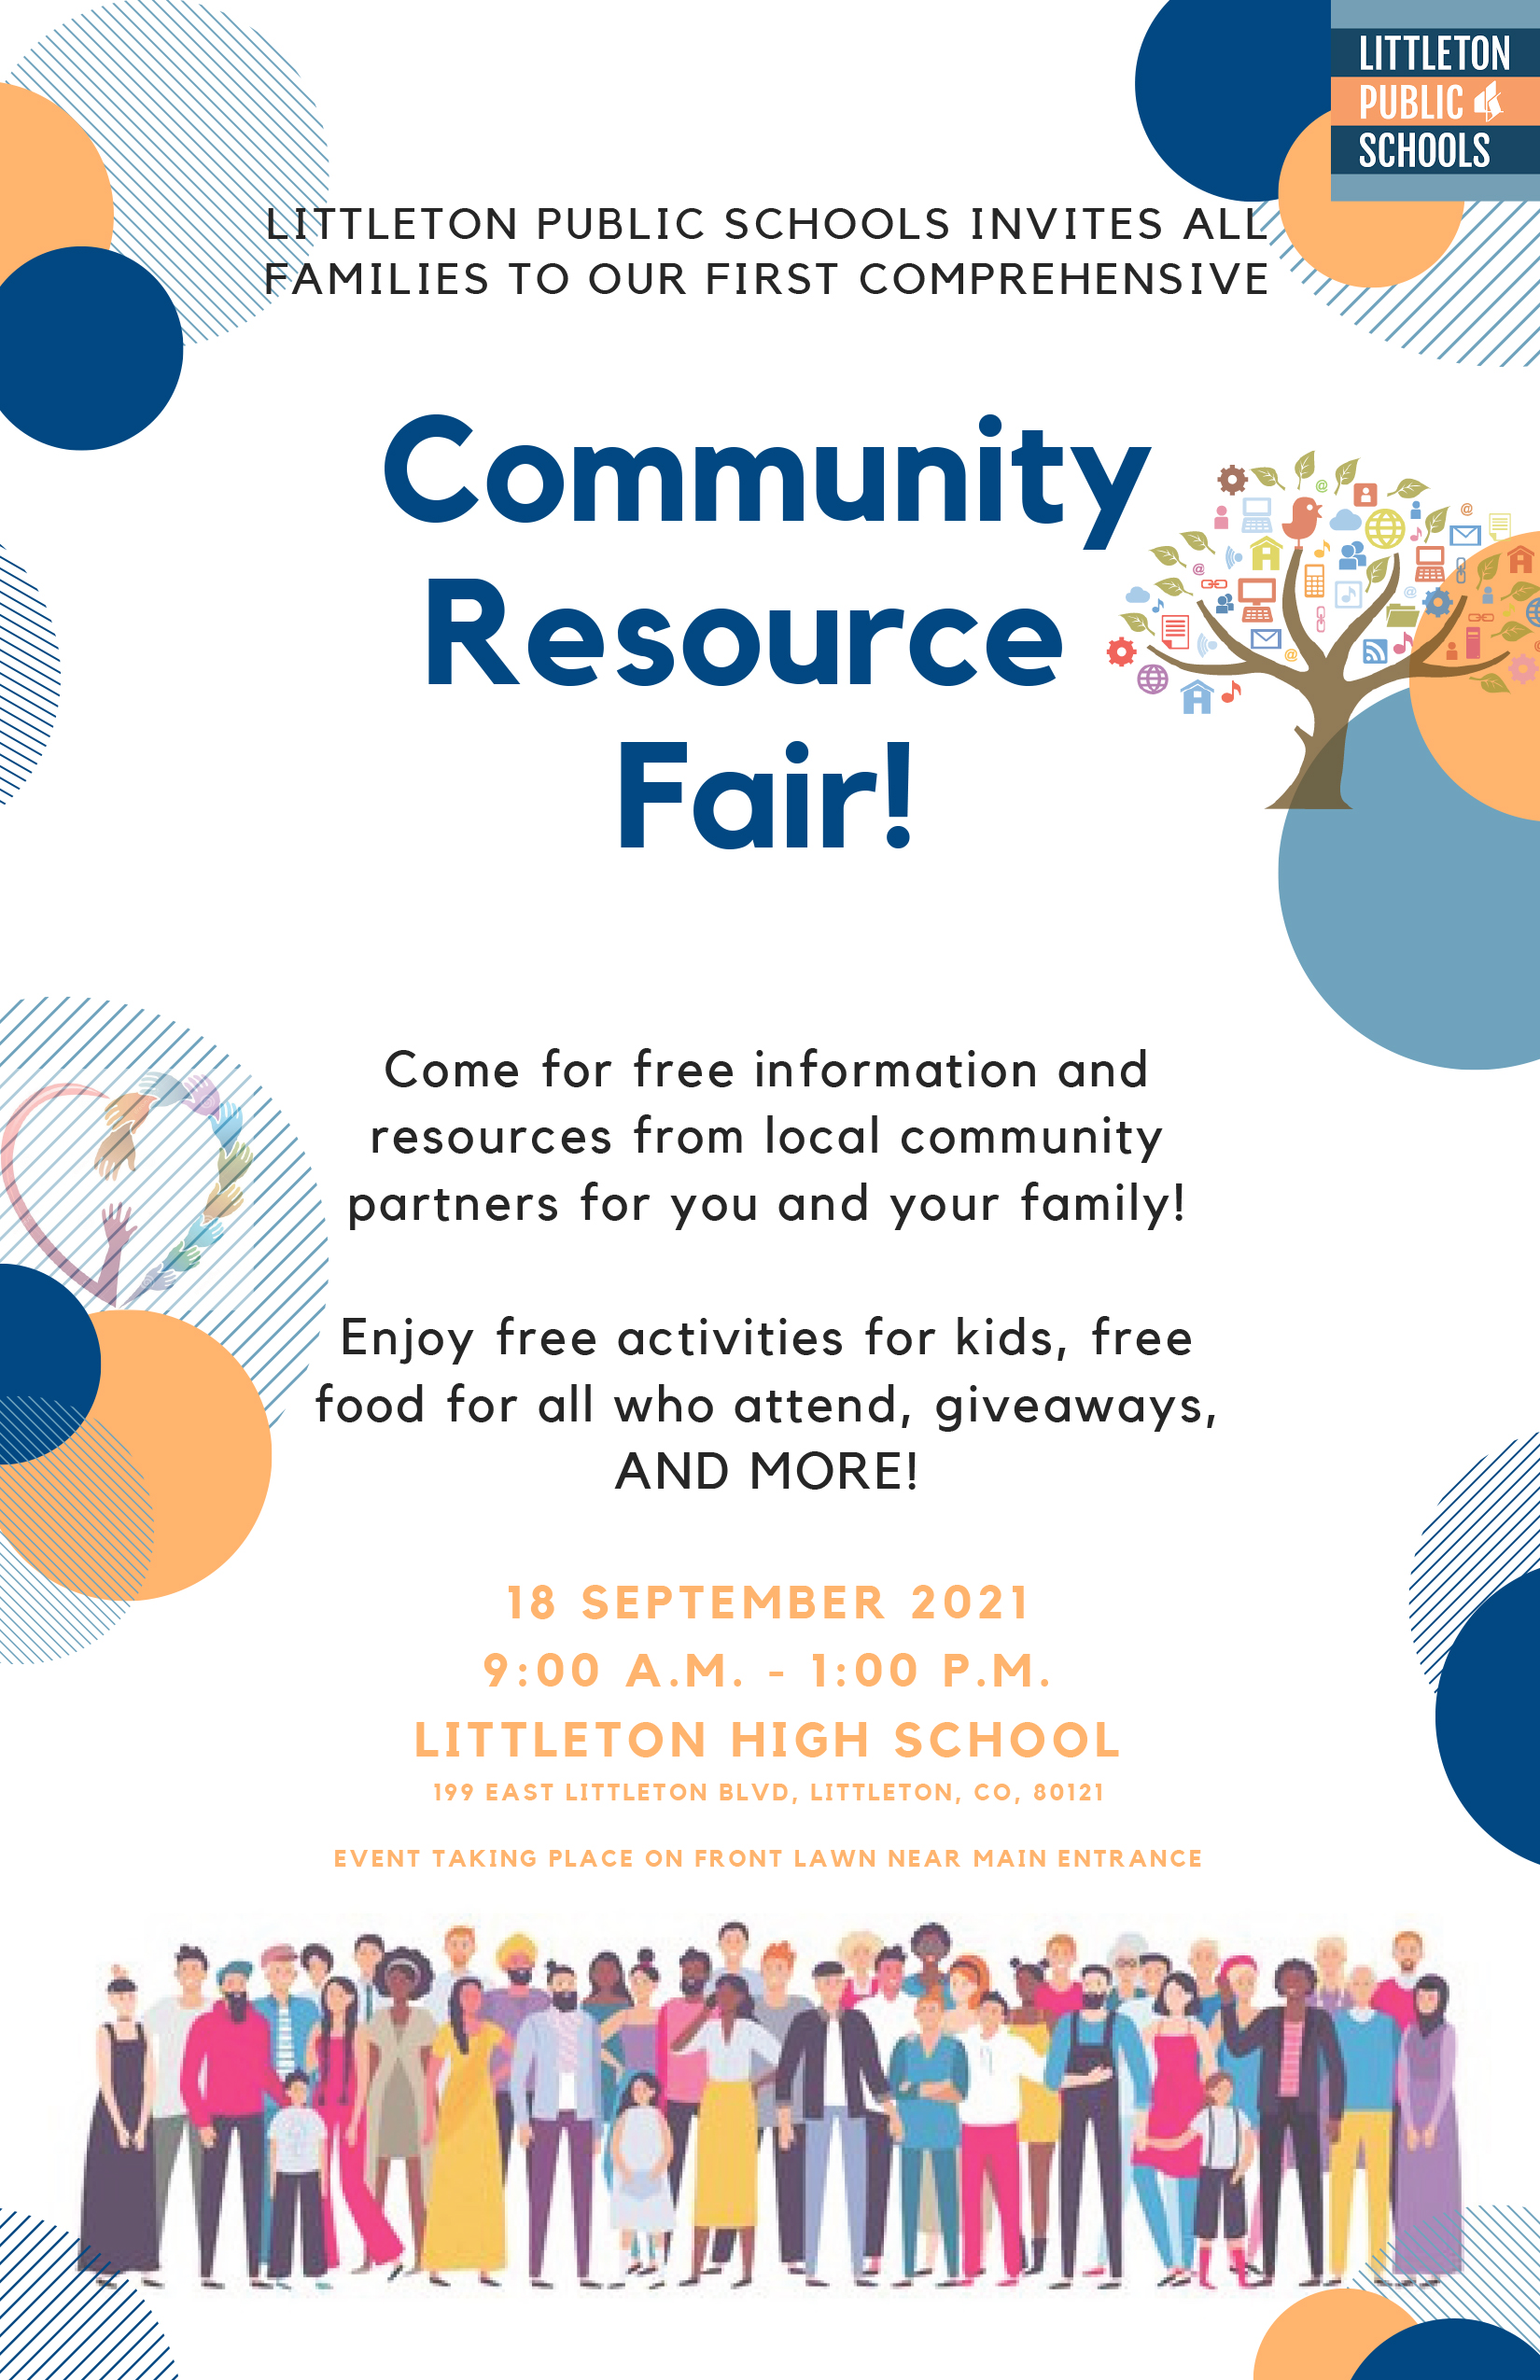 LPS Community Resource Fair September 18 Littleton Public Schools